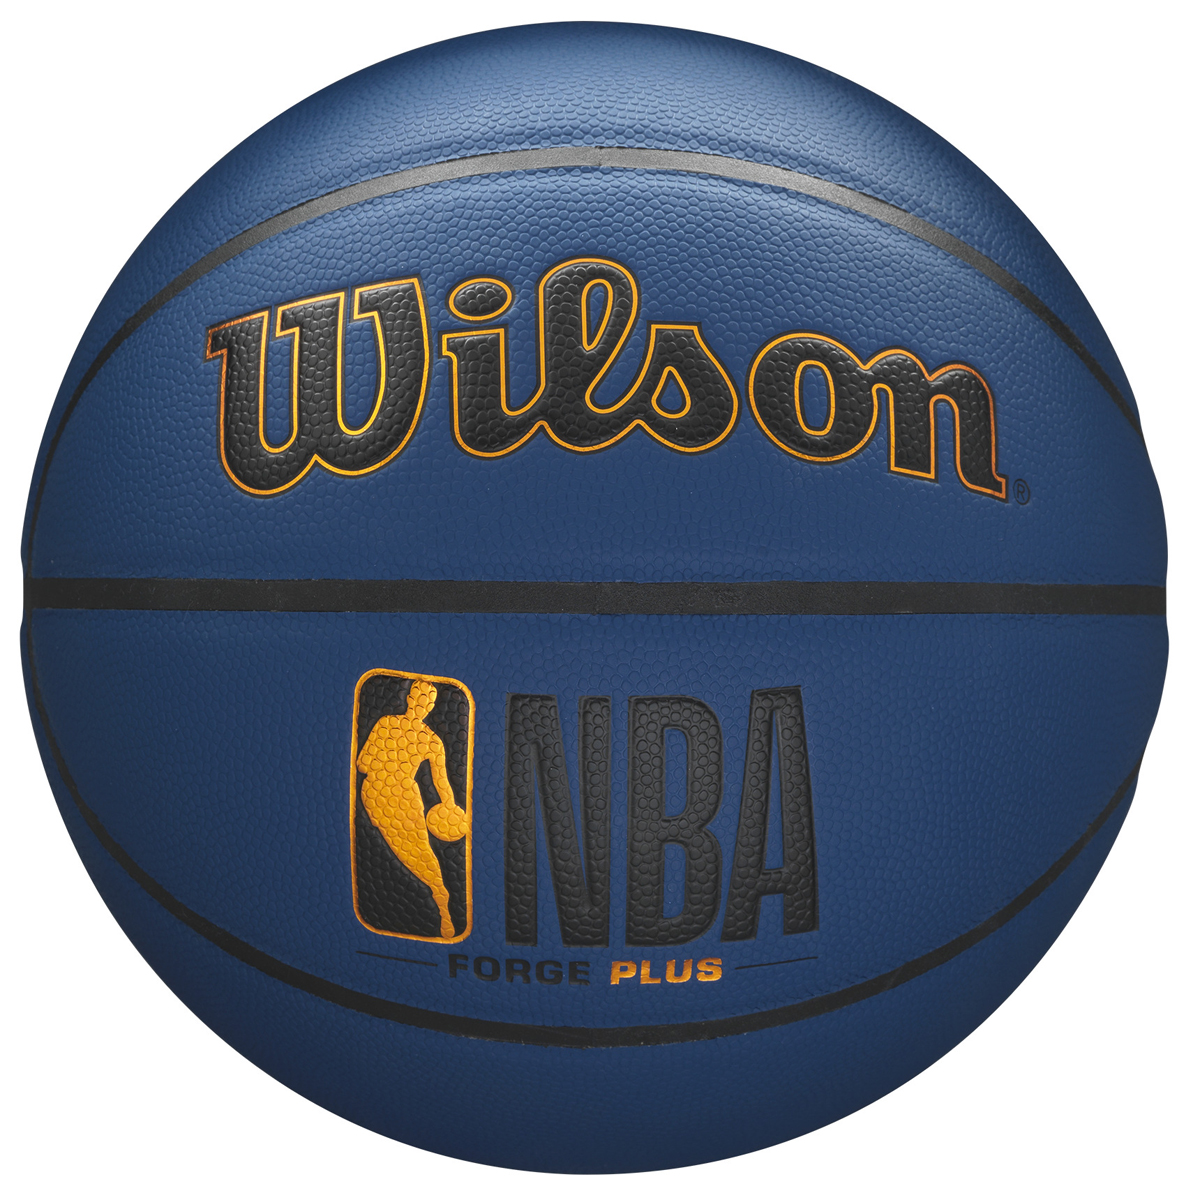 Image of Wilson NBA Forge Plus Basketball, Orange